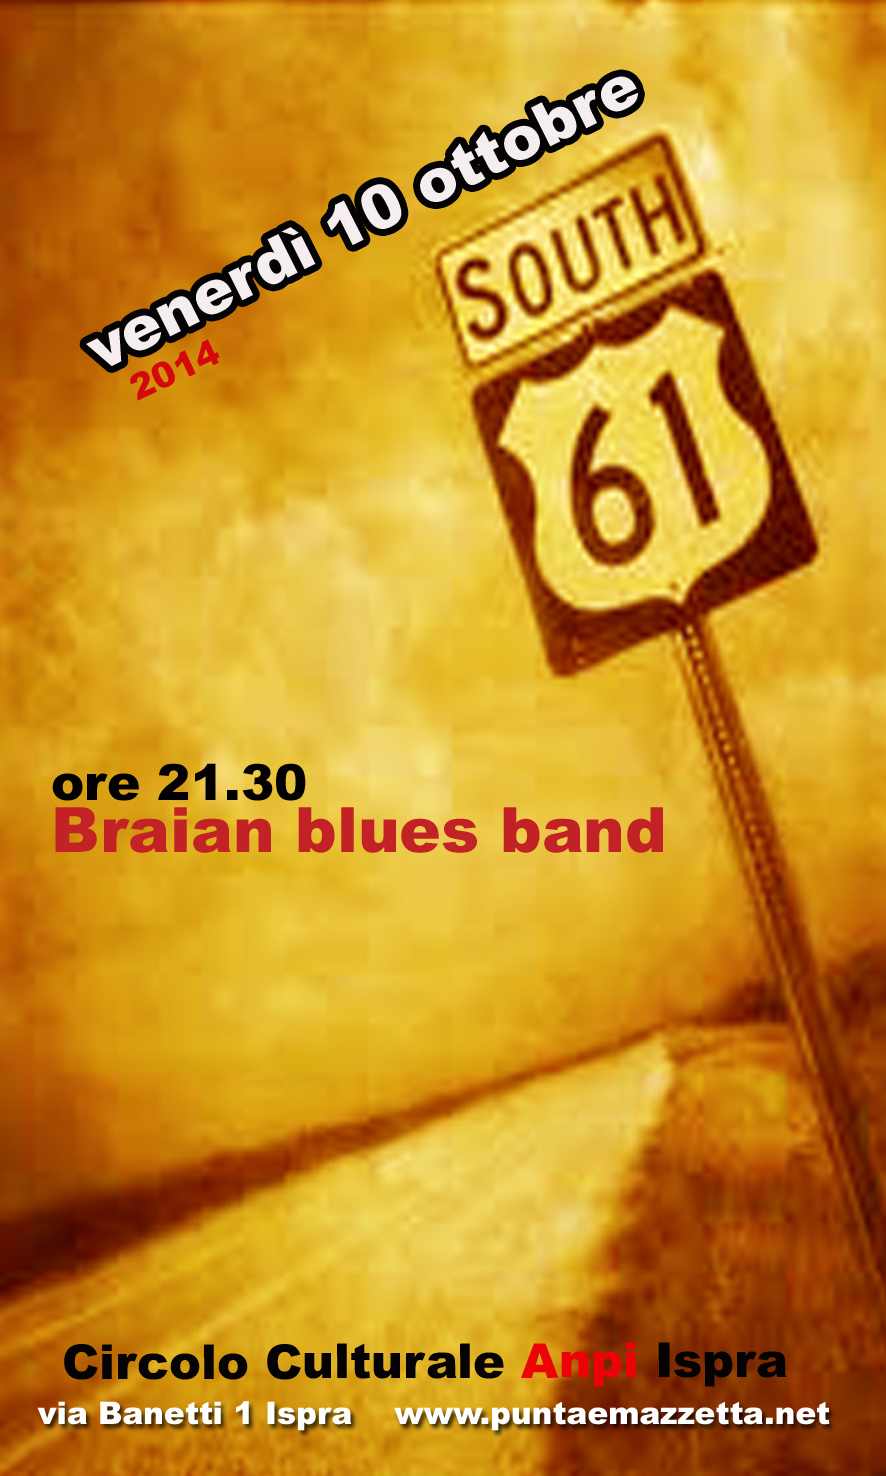 braian blues venerdì 10 ottobre 2014